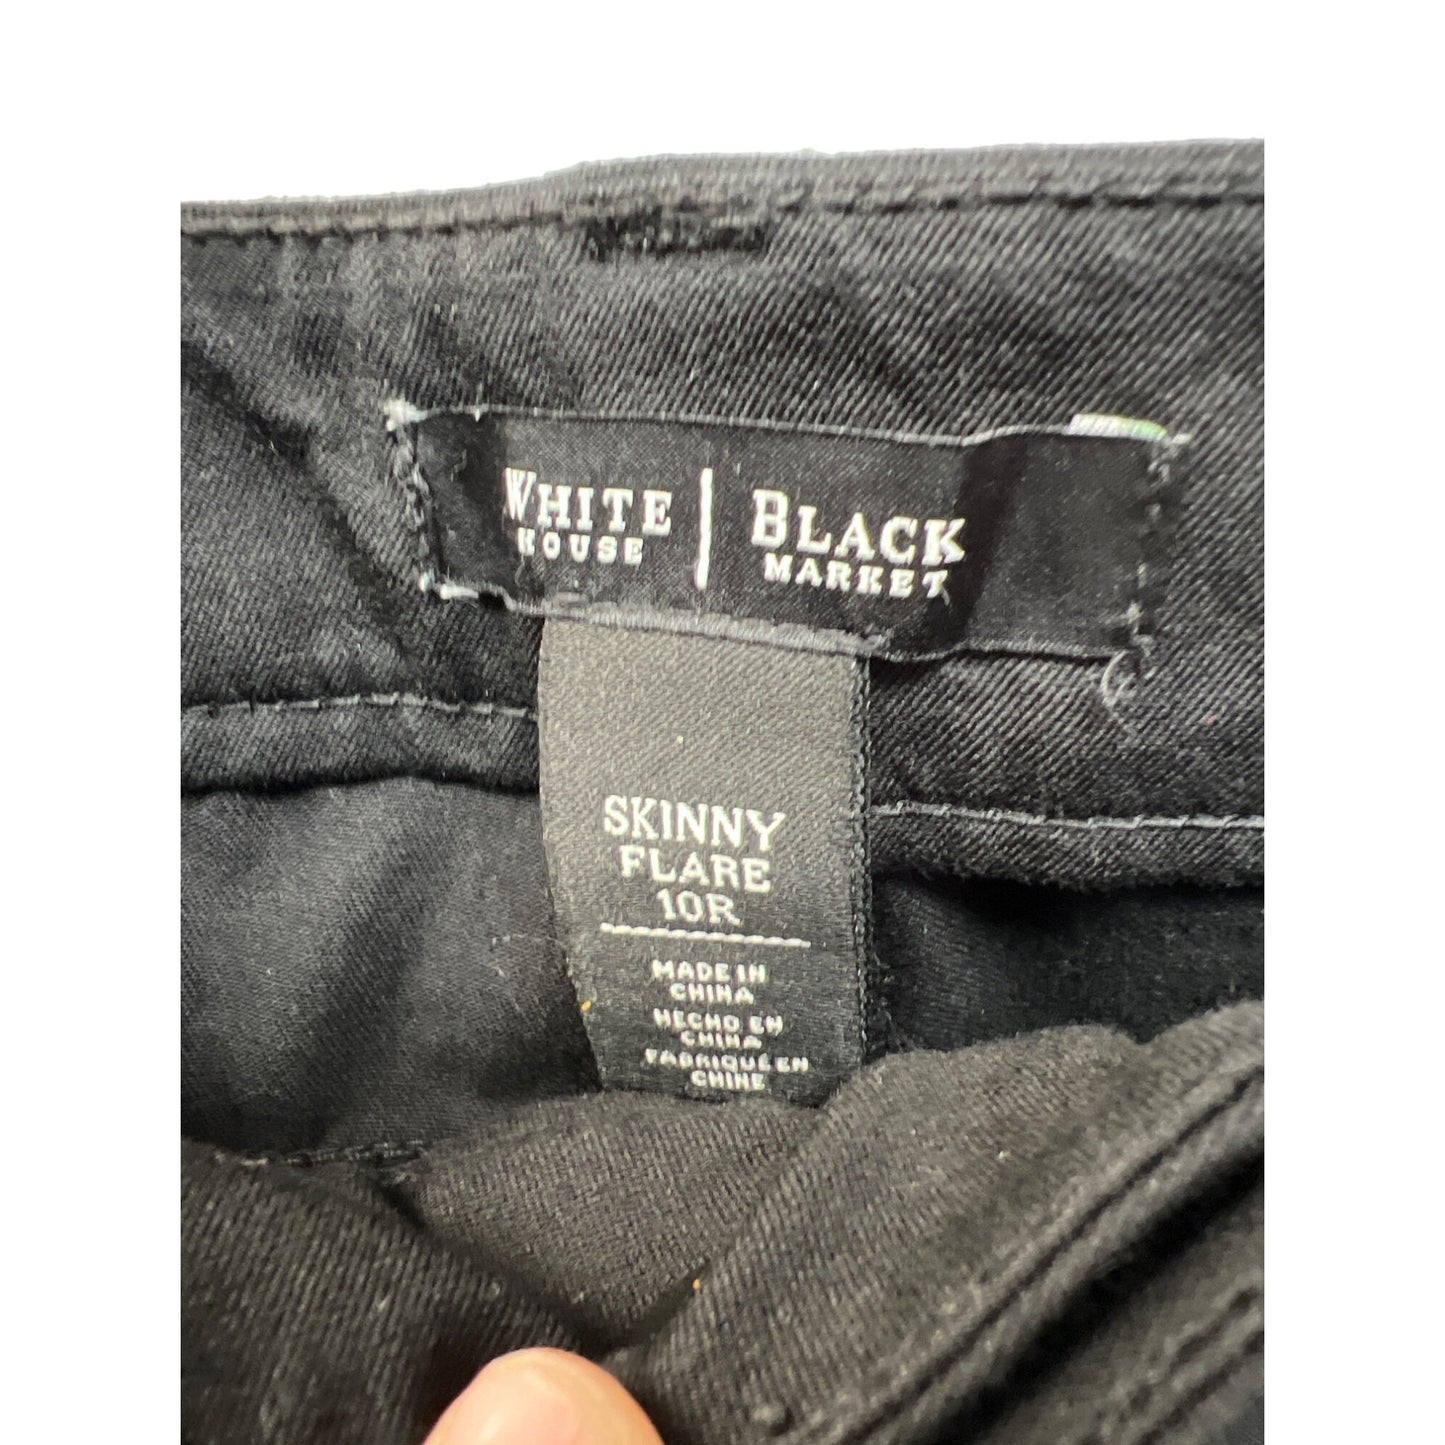 White House Black Market Skinny Flare Black Pants